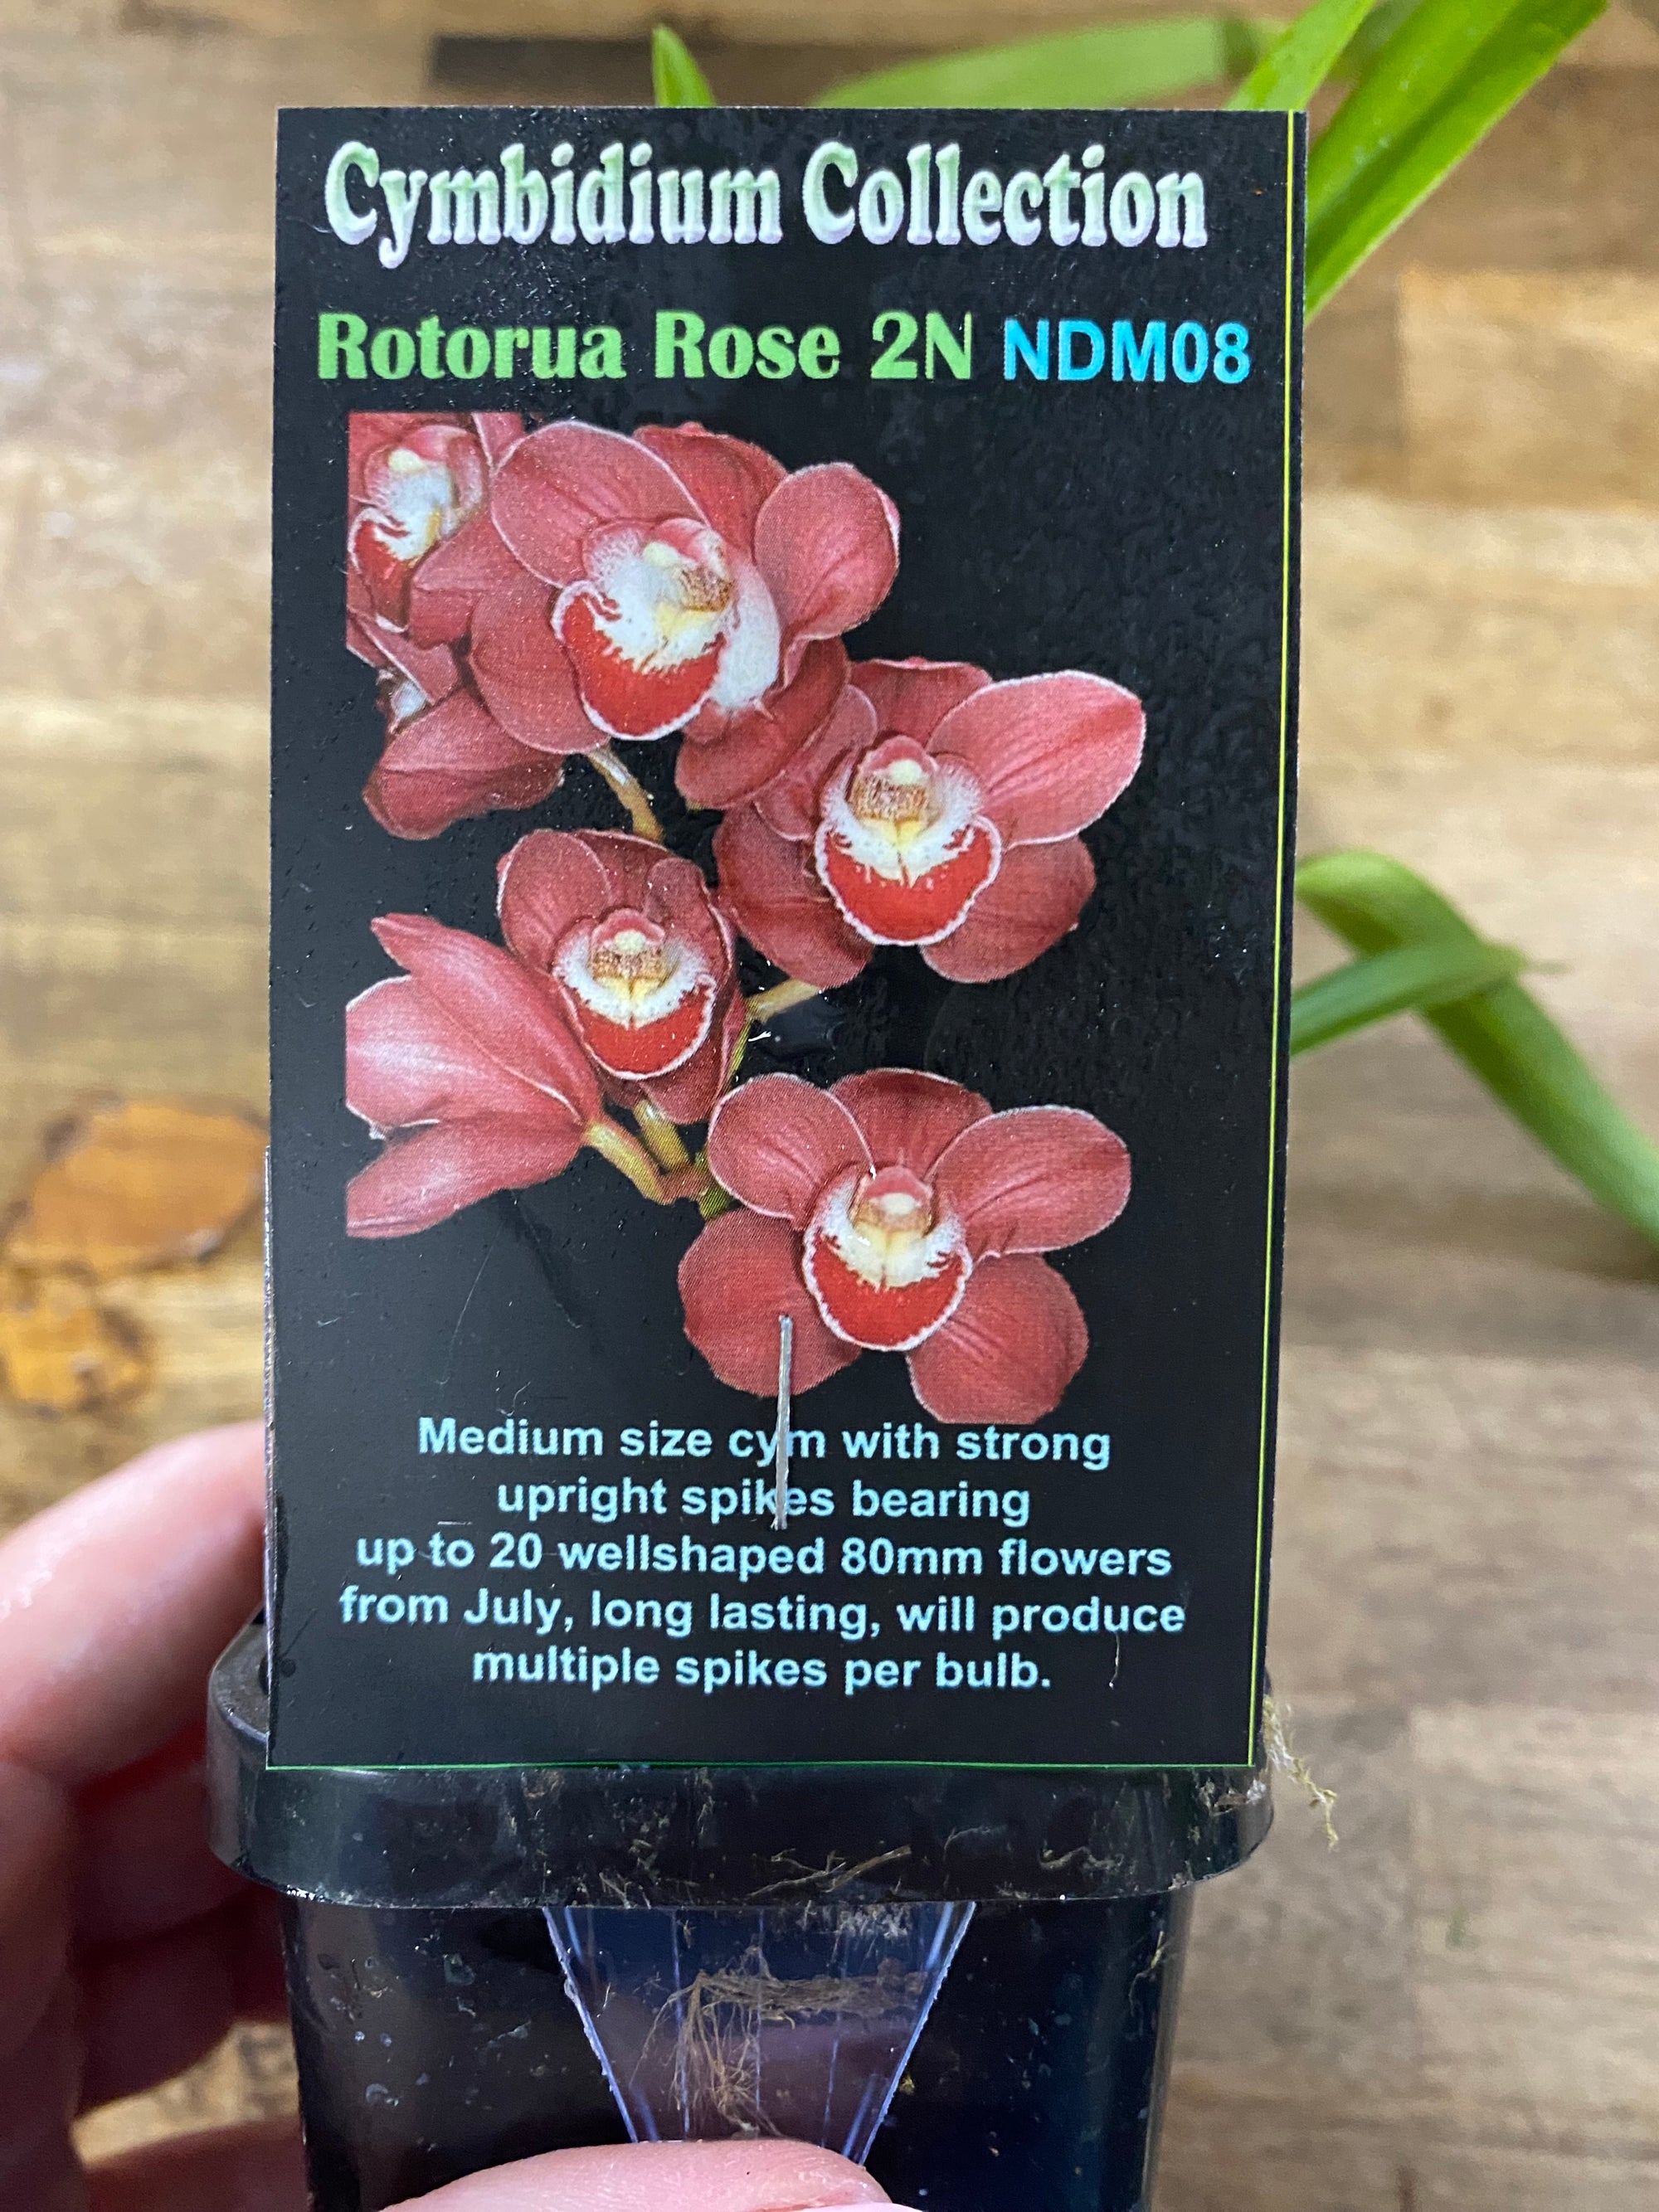 Cymbidium Collection Rotorua Rose 2N